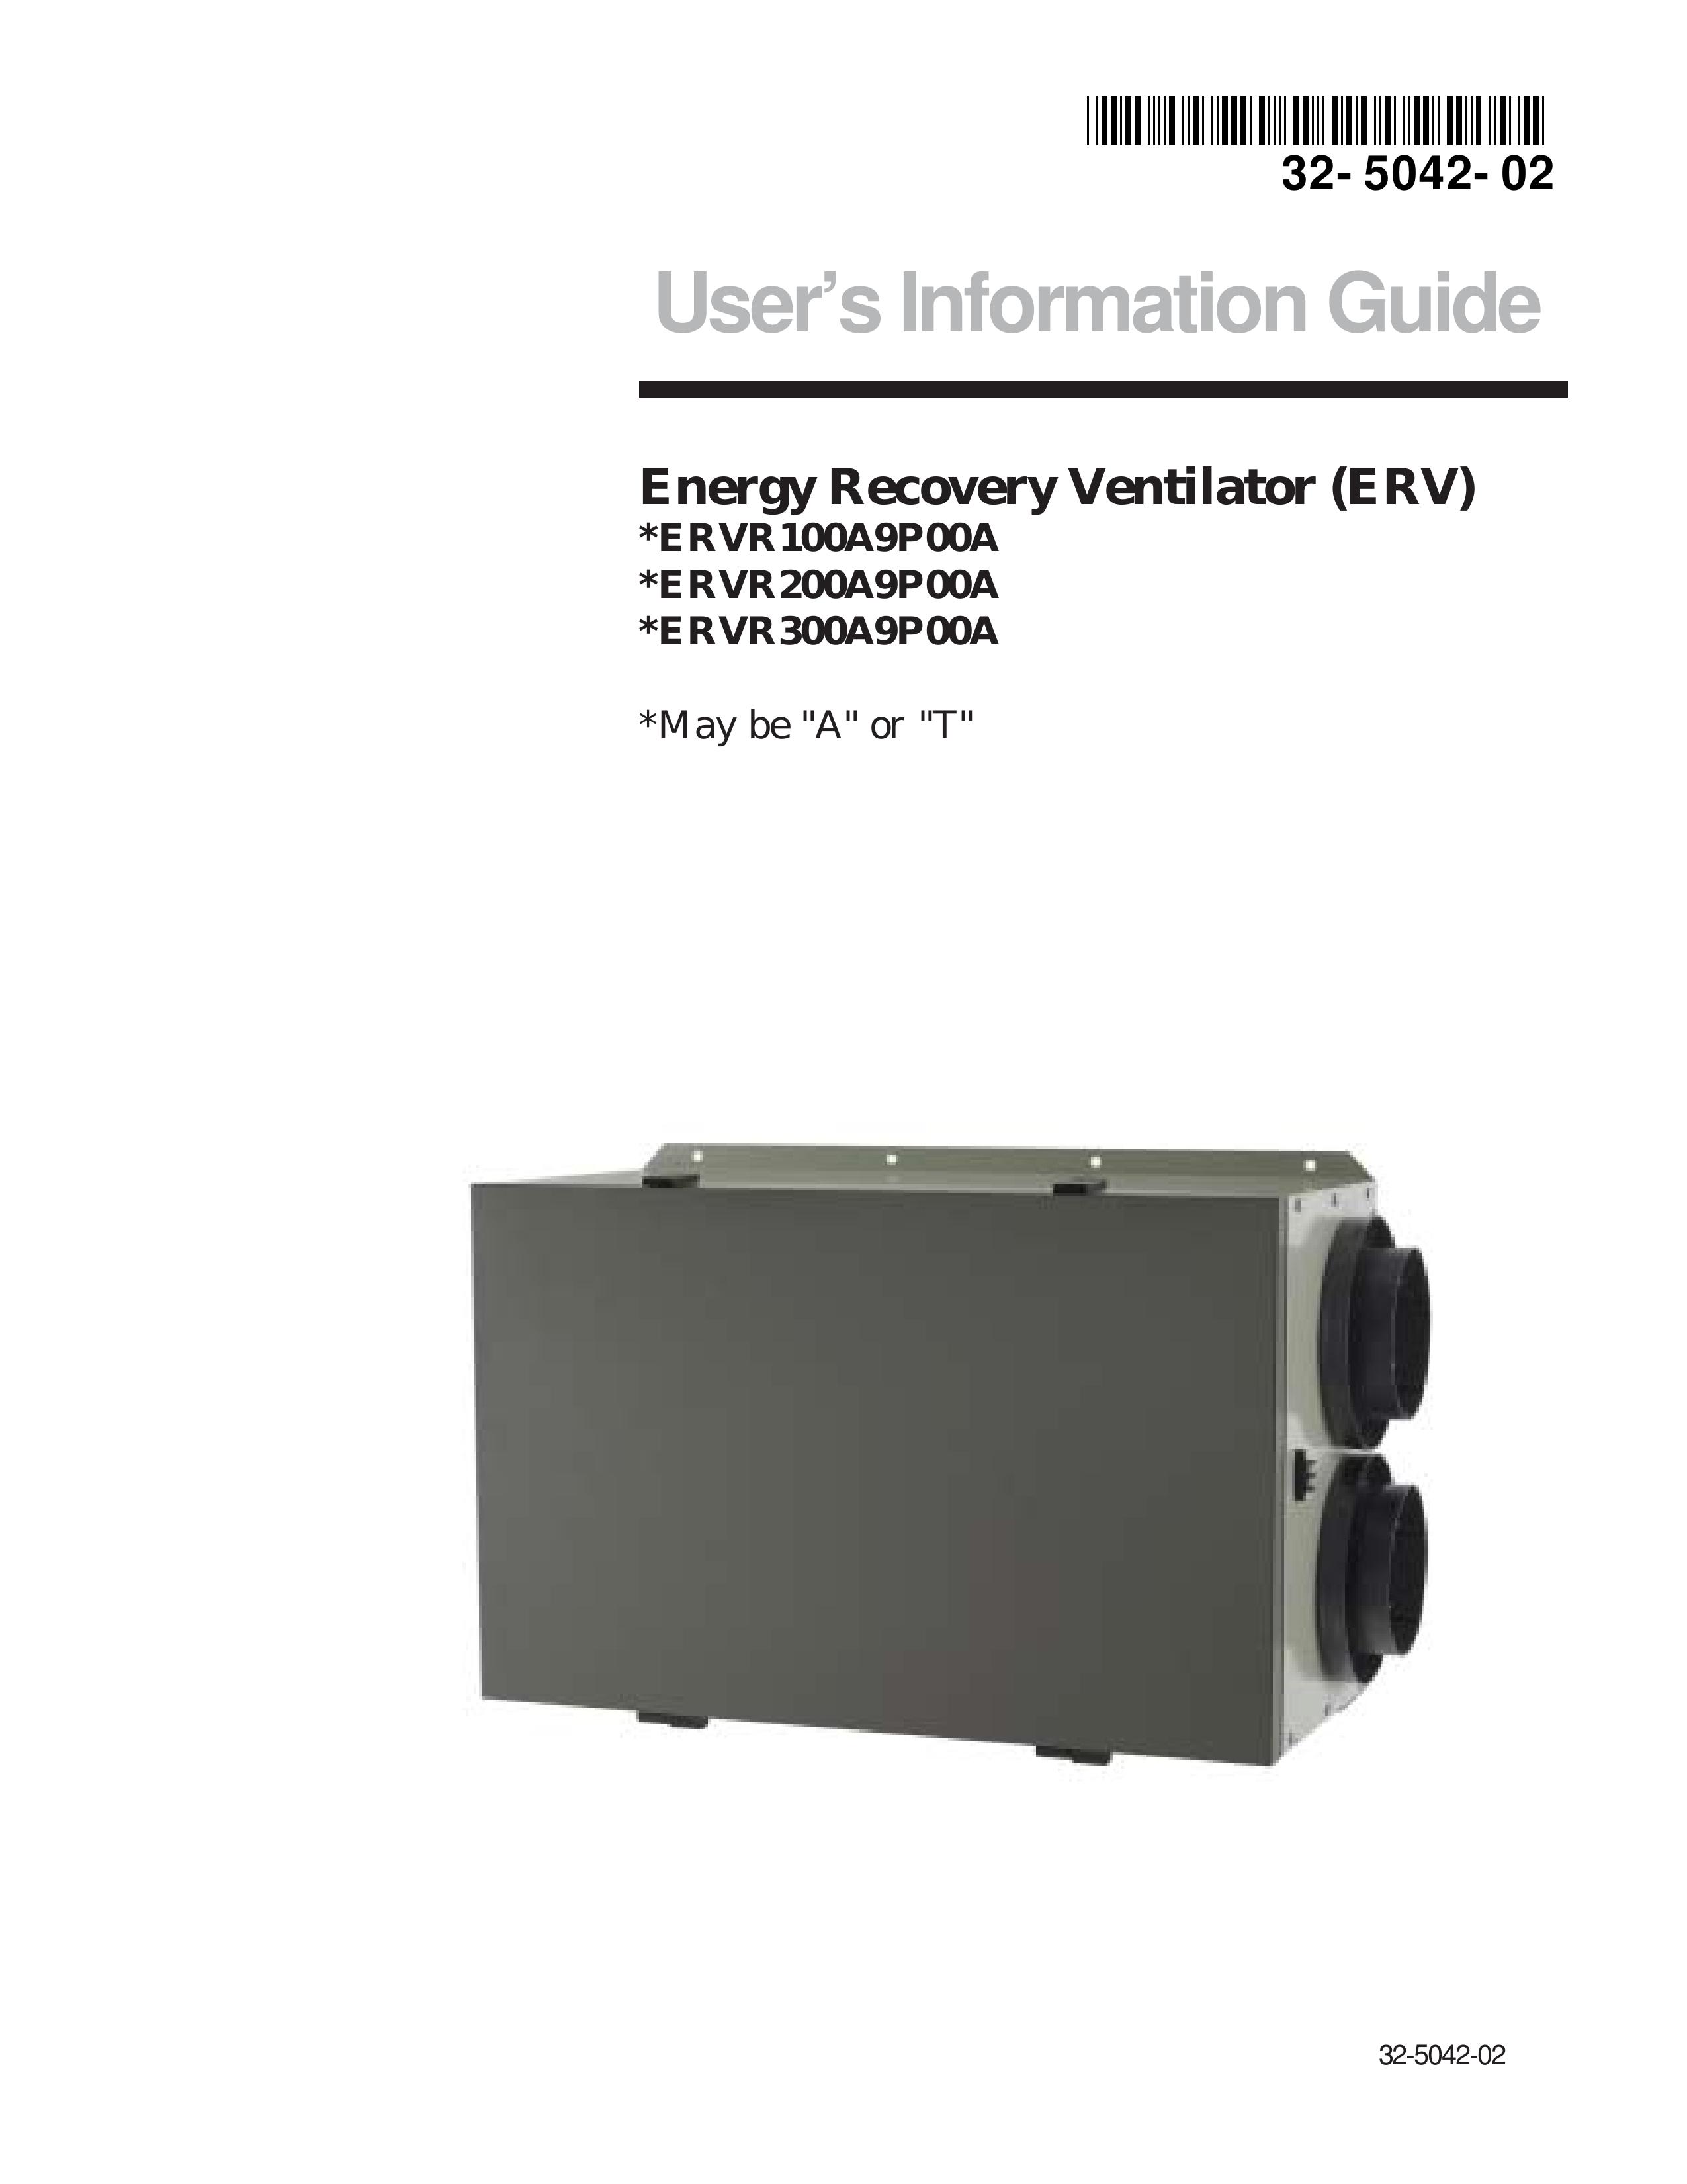 American Standard ERVR100A9P00A Ventilation Hood User Manual